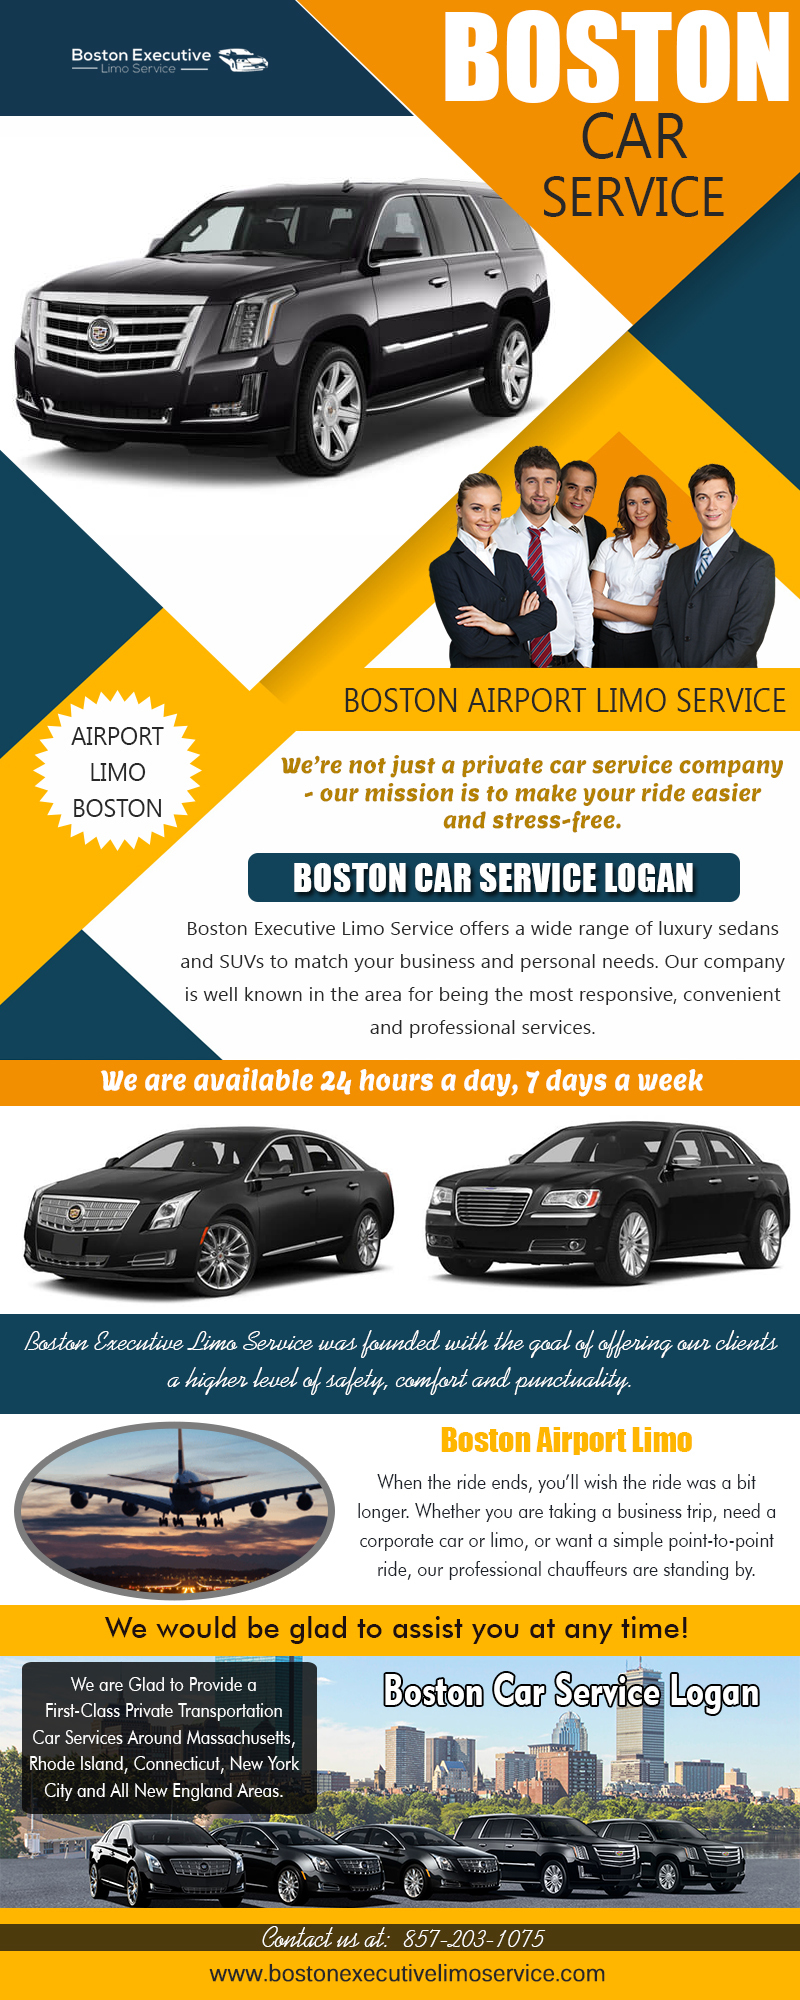 Boston Car Services | 857-203-1075 | bostonexecutivelimoservice.com